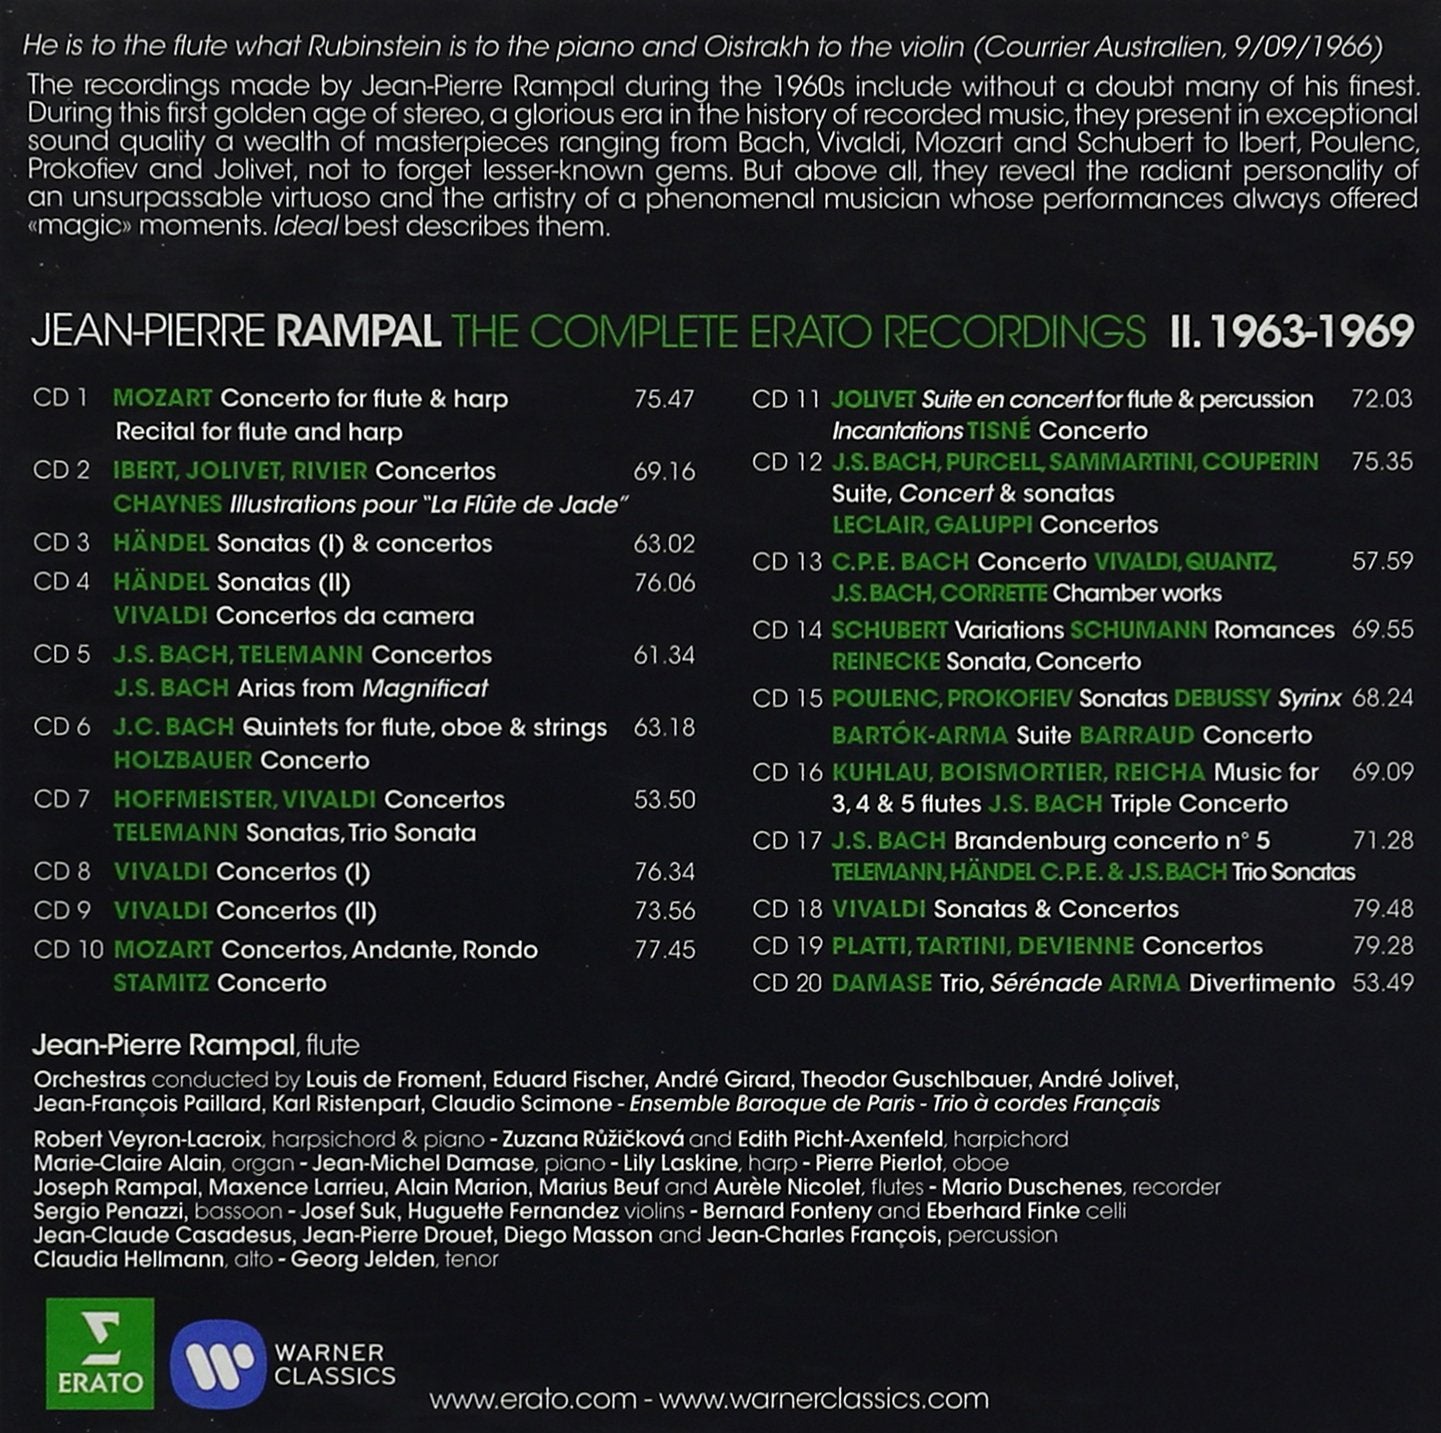 JEAN-PIERRE RAMPAL: The Complete Erato Recordings, Volume 2 (20 CDs)